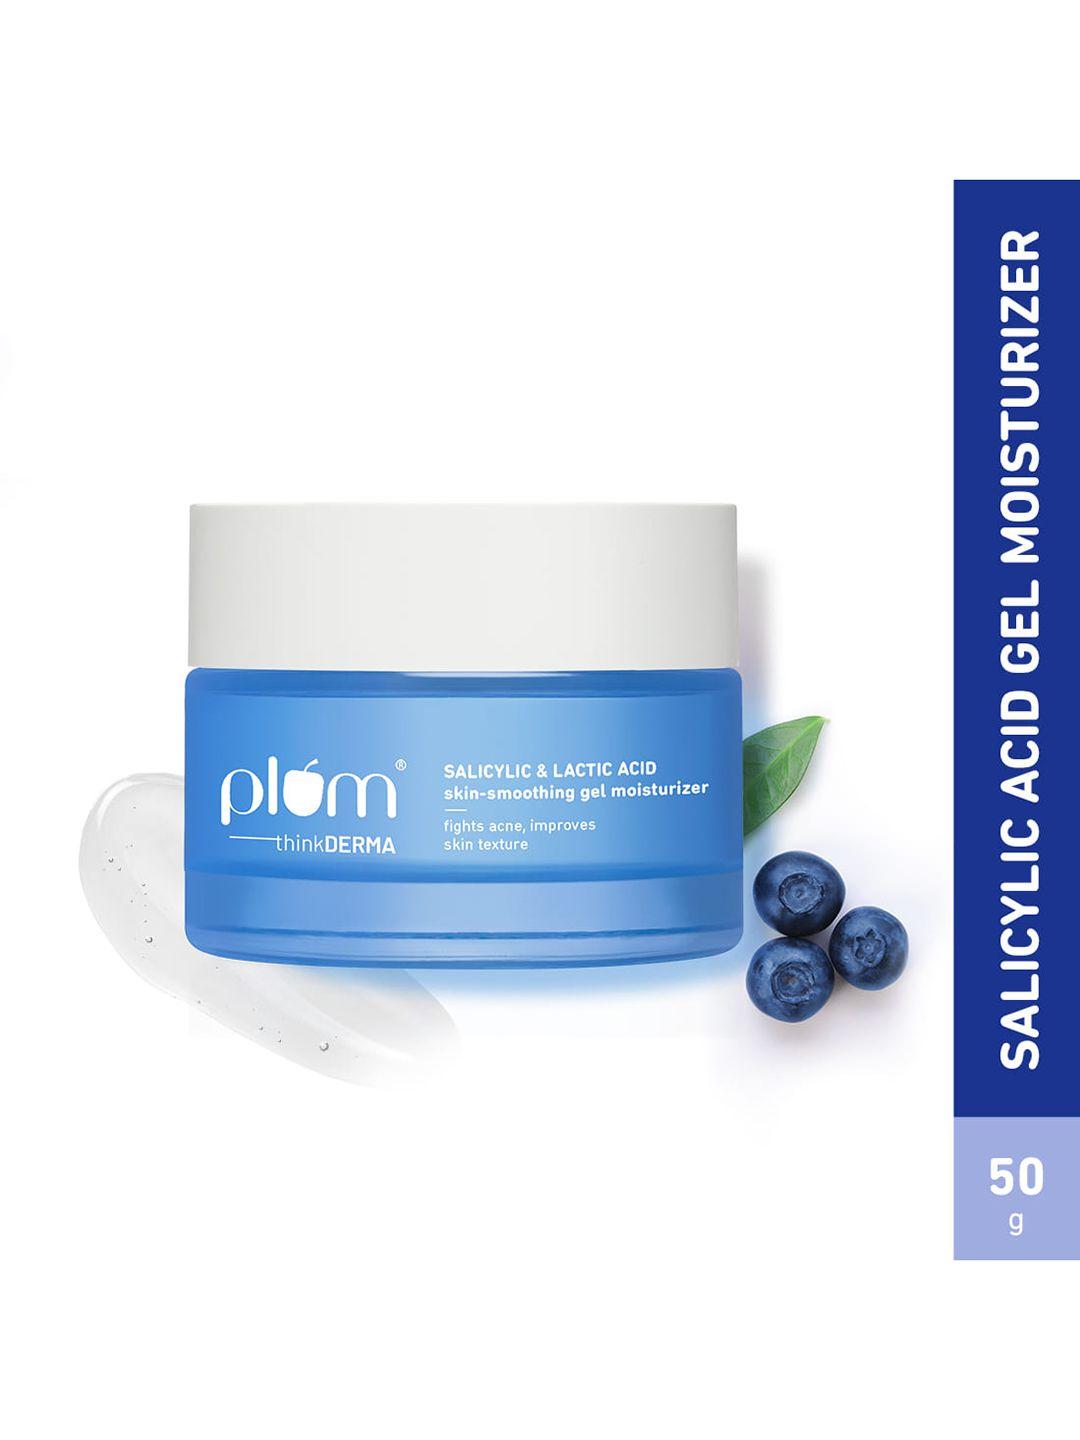 plum thinkderma salicylic & lactic acid gel moisturizer 50g